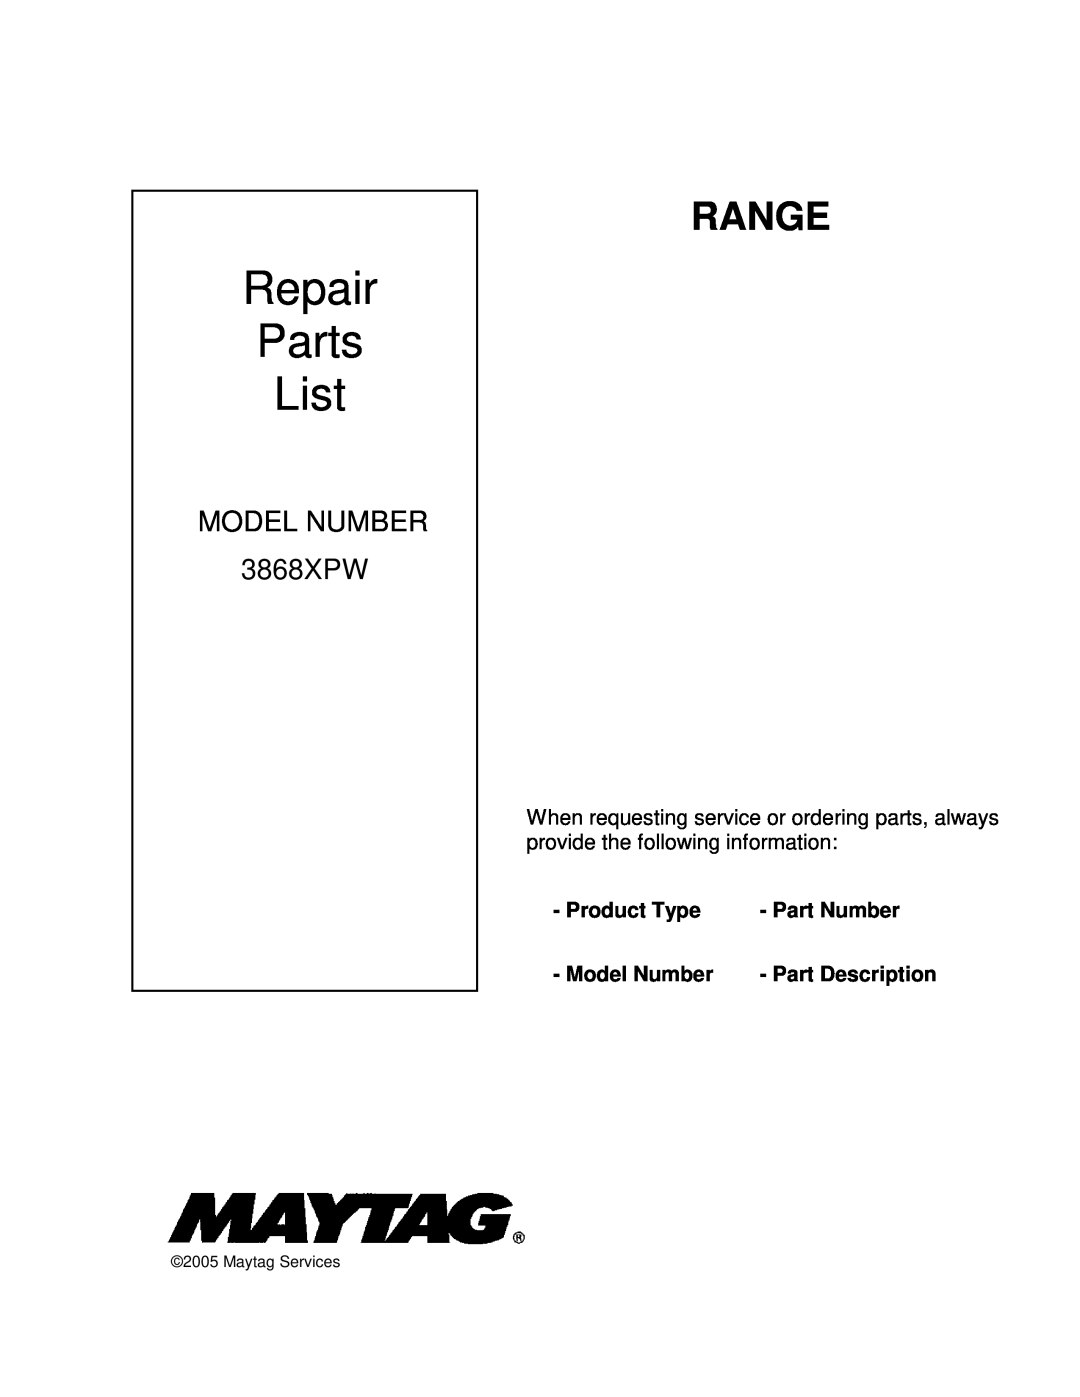 Whirlpool 3868XPW manual Product Type, Part Number, Model Number, Part Description, Repair Parts List, Range 